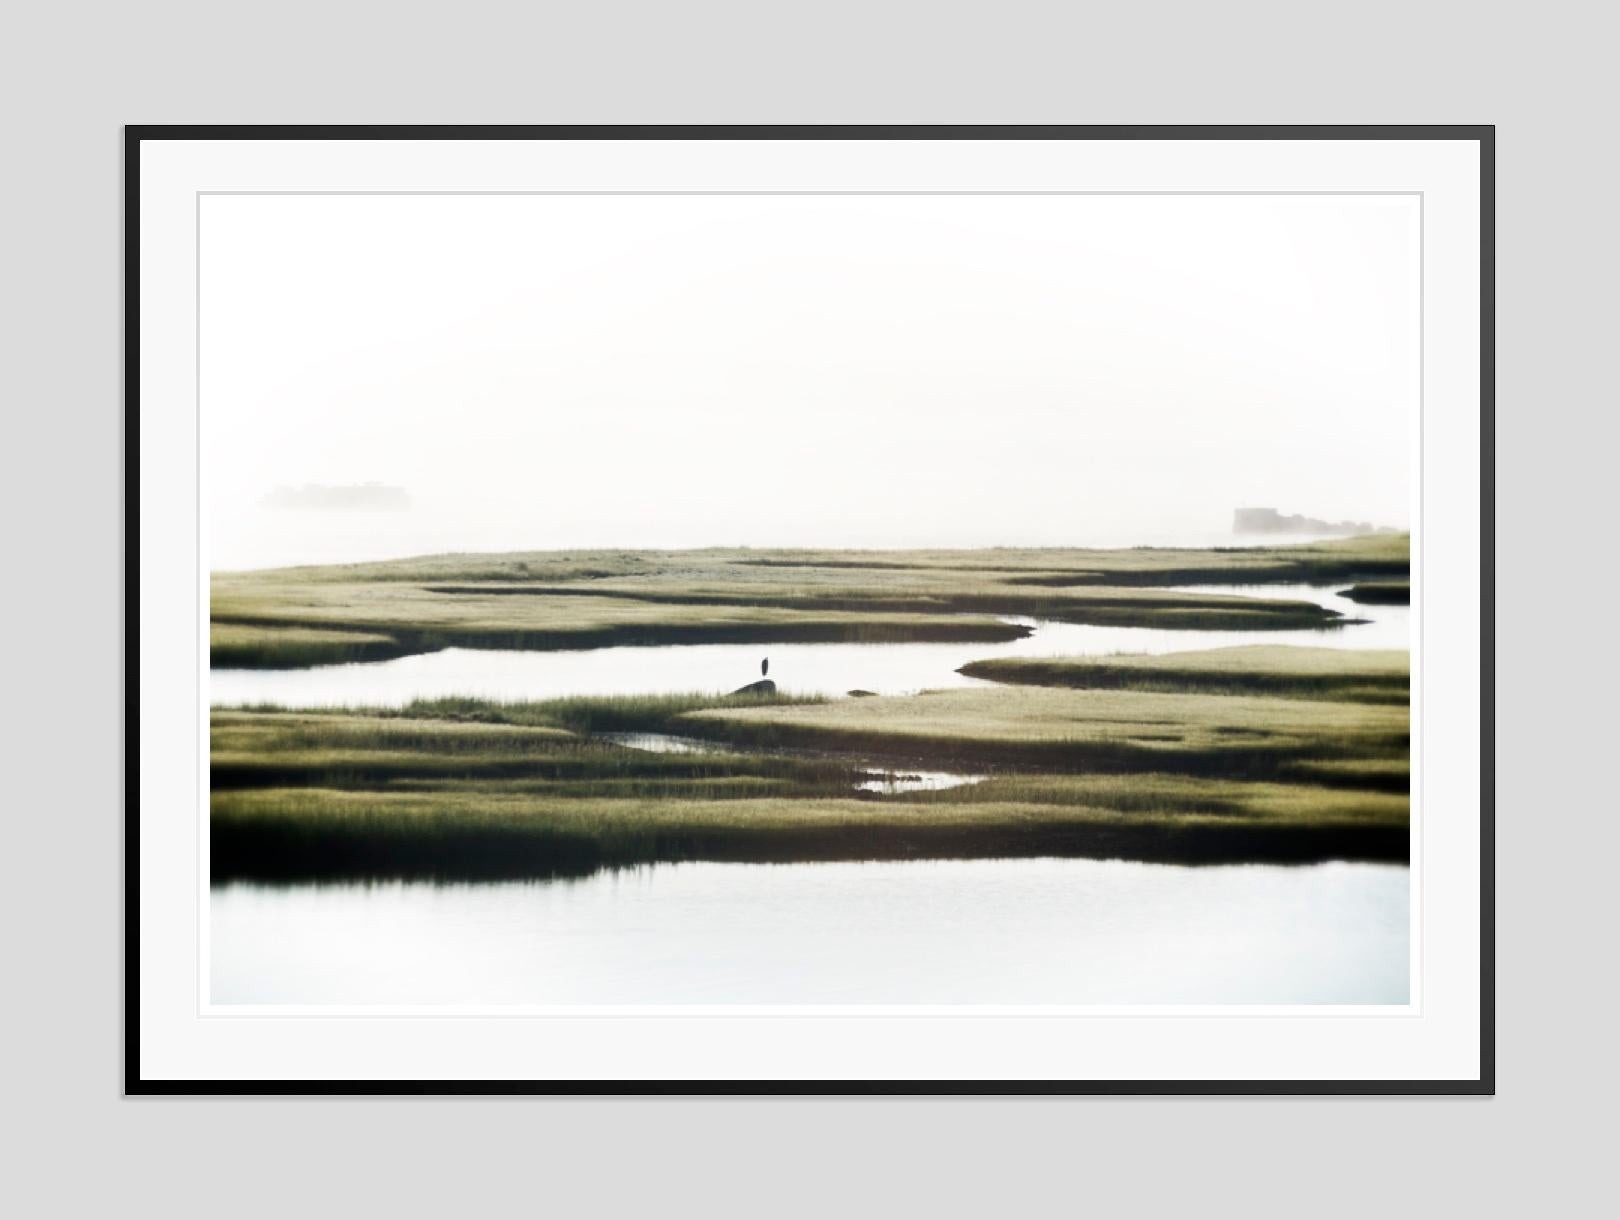 Massachusetts Mist -  Oversize Signed Limited Edition Print  - Photograph by Stuart Möller